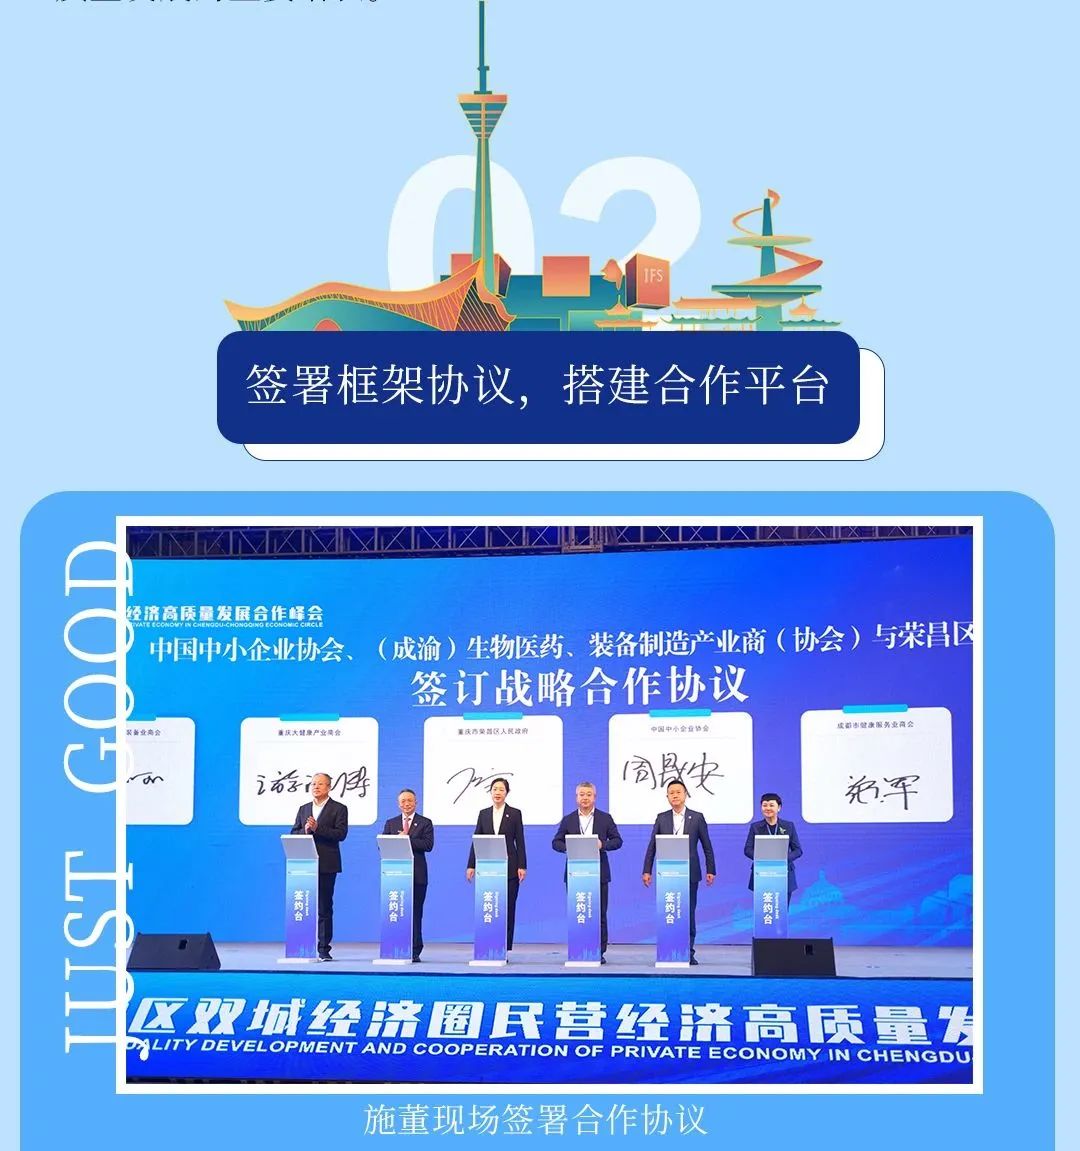 Chairman Shi Jun attended the first Chengdu-Chongqing Economic Circle Cooperation Summit